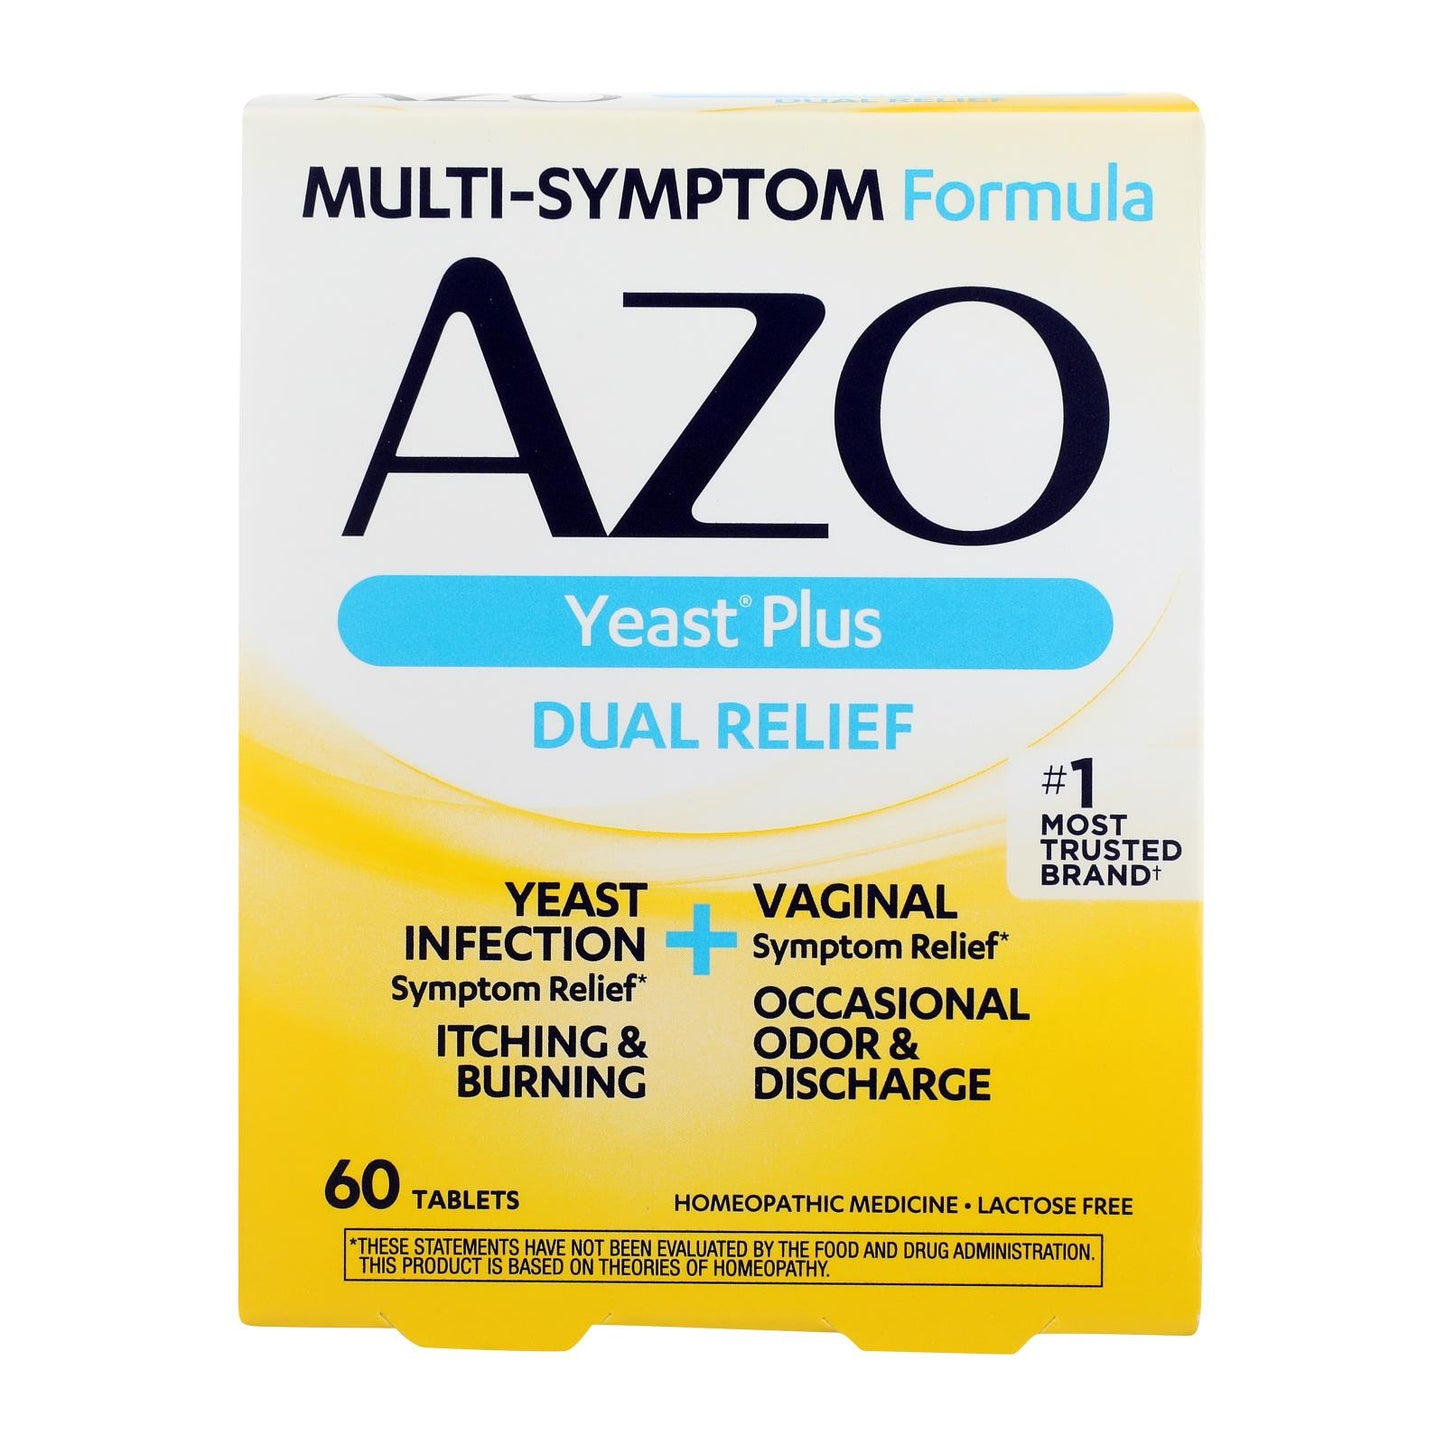 Azo Yeast Plus Dual Relief Multi-Symptom Formula, 60 Tablets